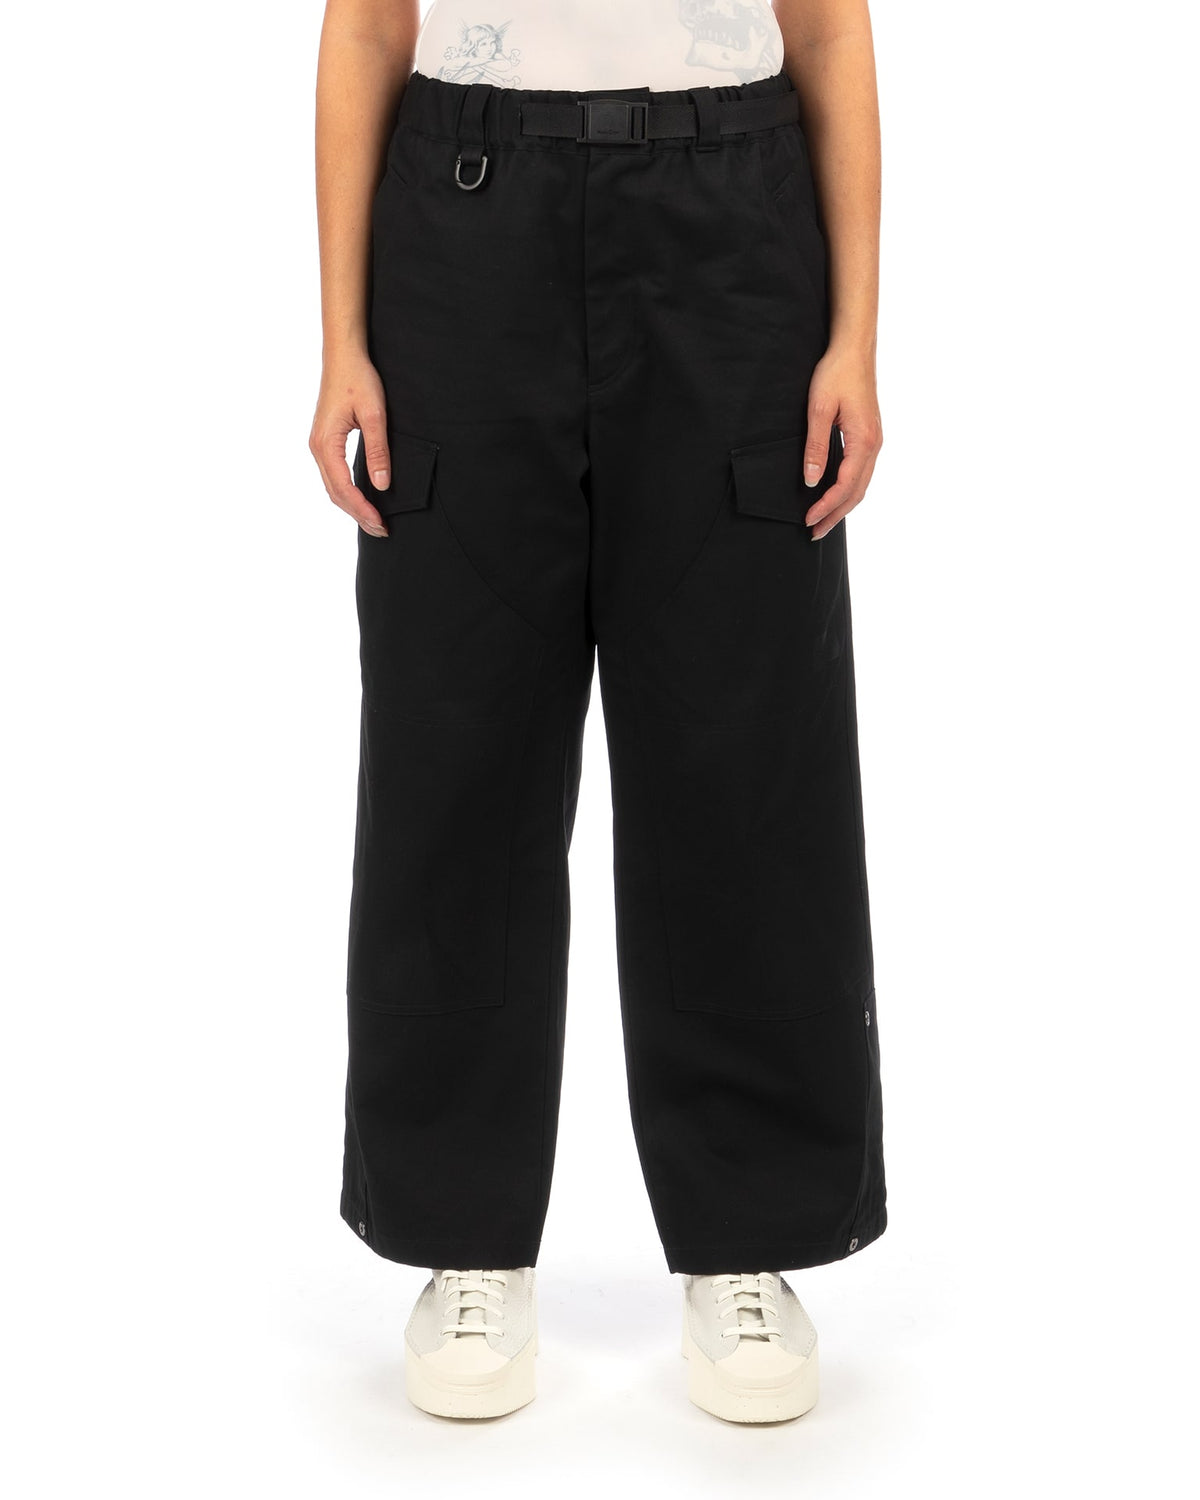 adidas Y-3 | GFX Workwear Pants Black - Concrete